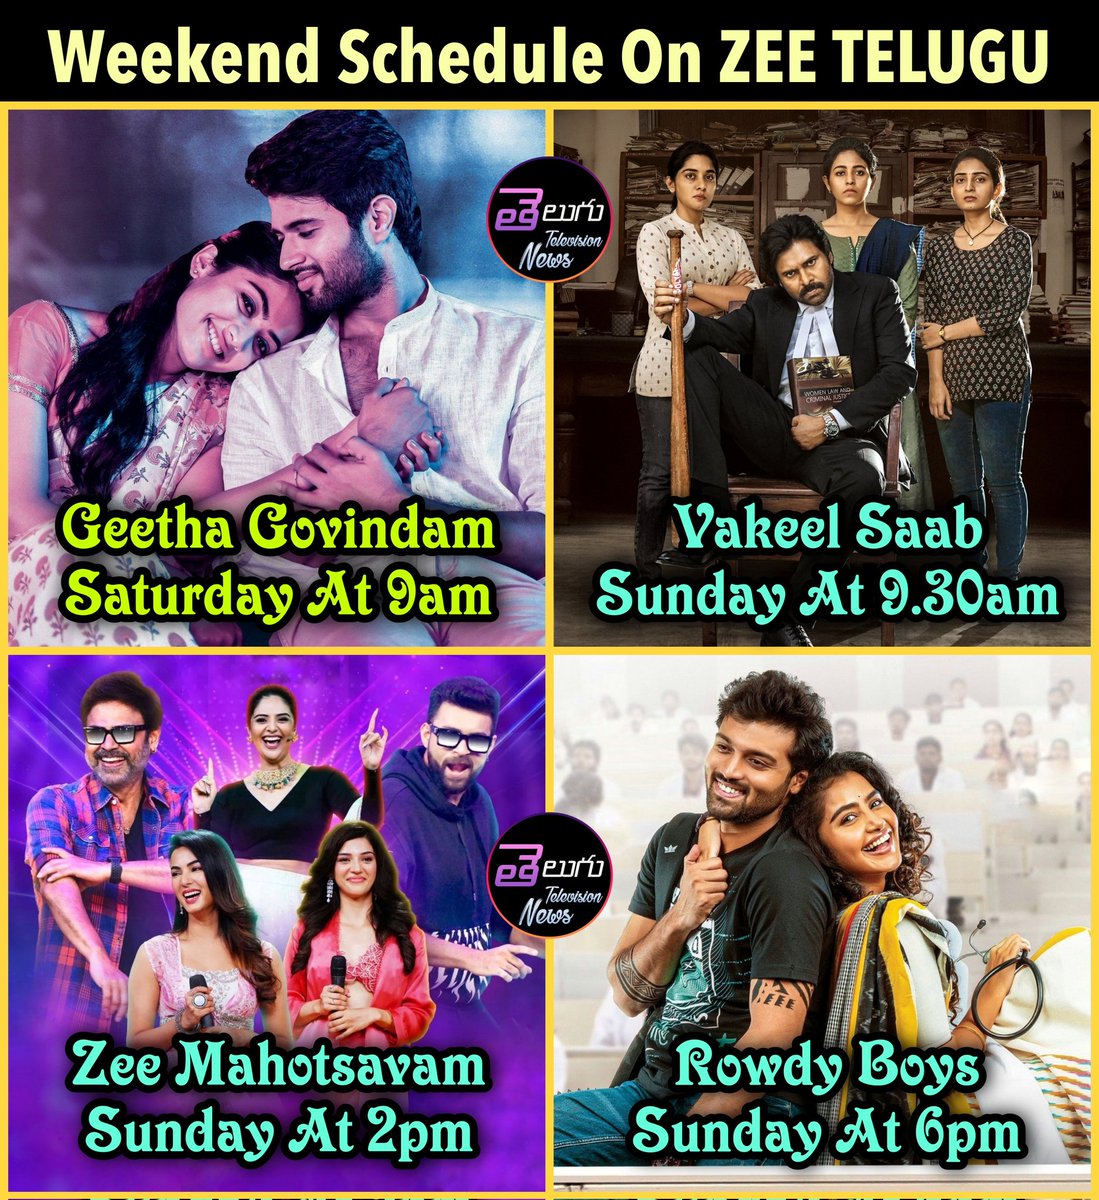 Weekend Schedule On #ZeeTelugu

Saturday
9am:- #GeethaGovindam

Sunday
9.30am:- #VakeelSaab 
2pm:- #ZeeMahotsavam 
6pm:- #RowdyBoys

#VijayDeverakonda #RashmikaMandanna #PawanKalyan #Nivethathomas #Ashish #AnupamaParameshwaran